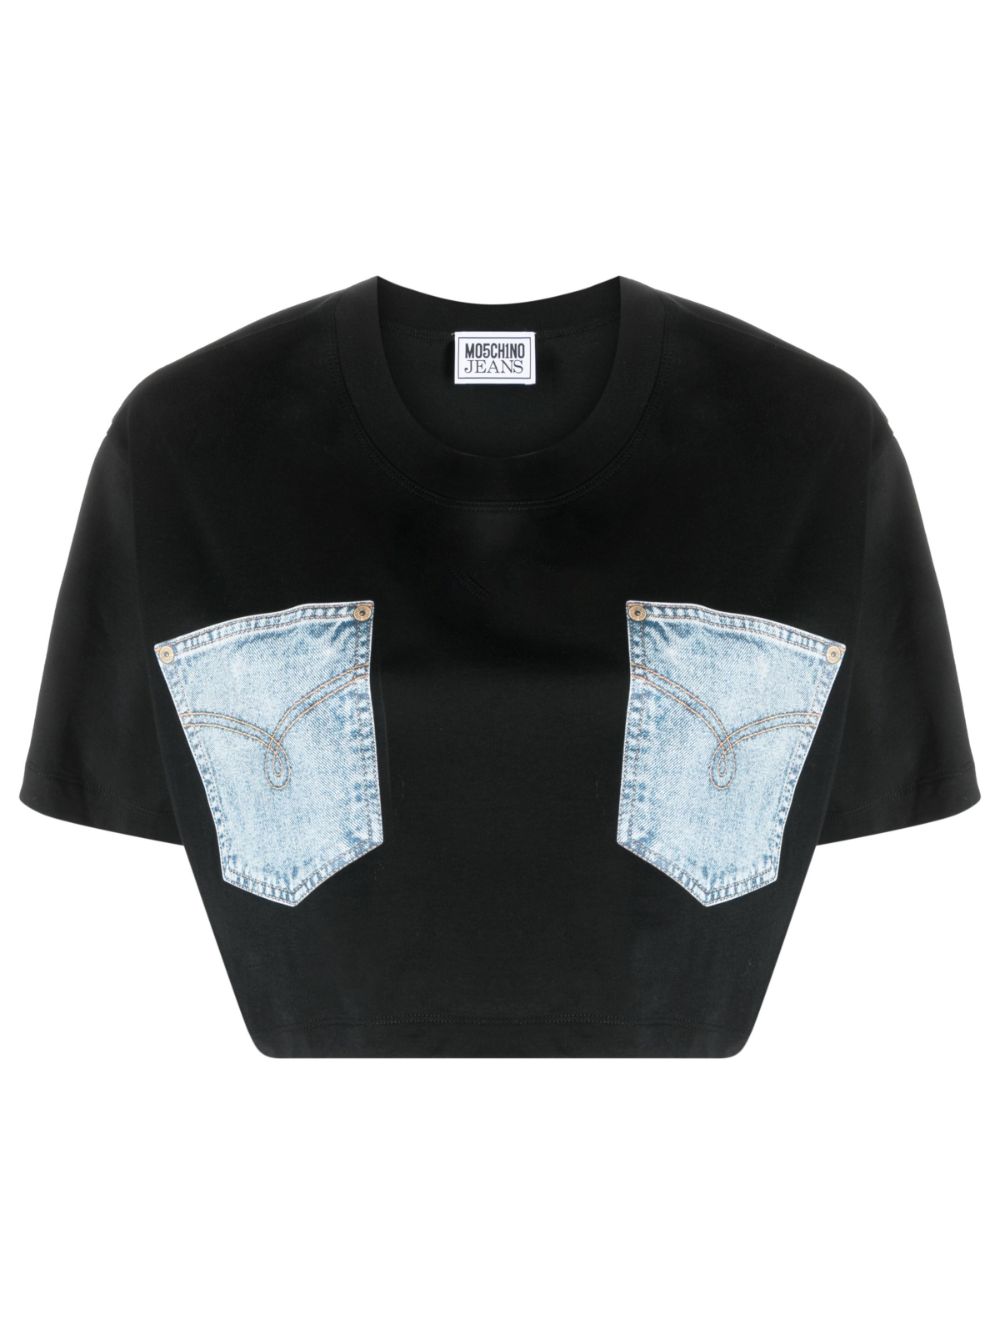 MOSCHINO JEANS logo-patch cotton T-shirt - Black